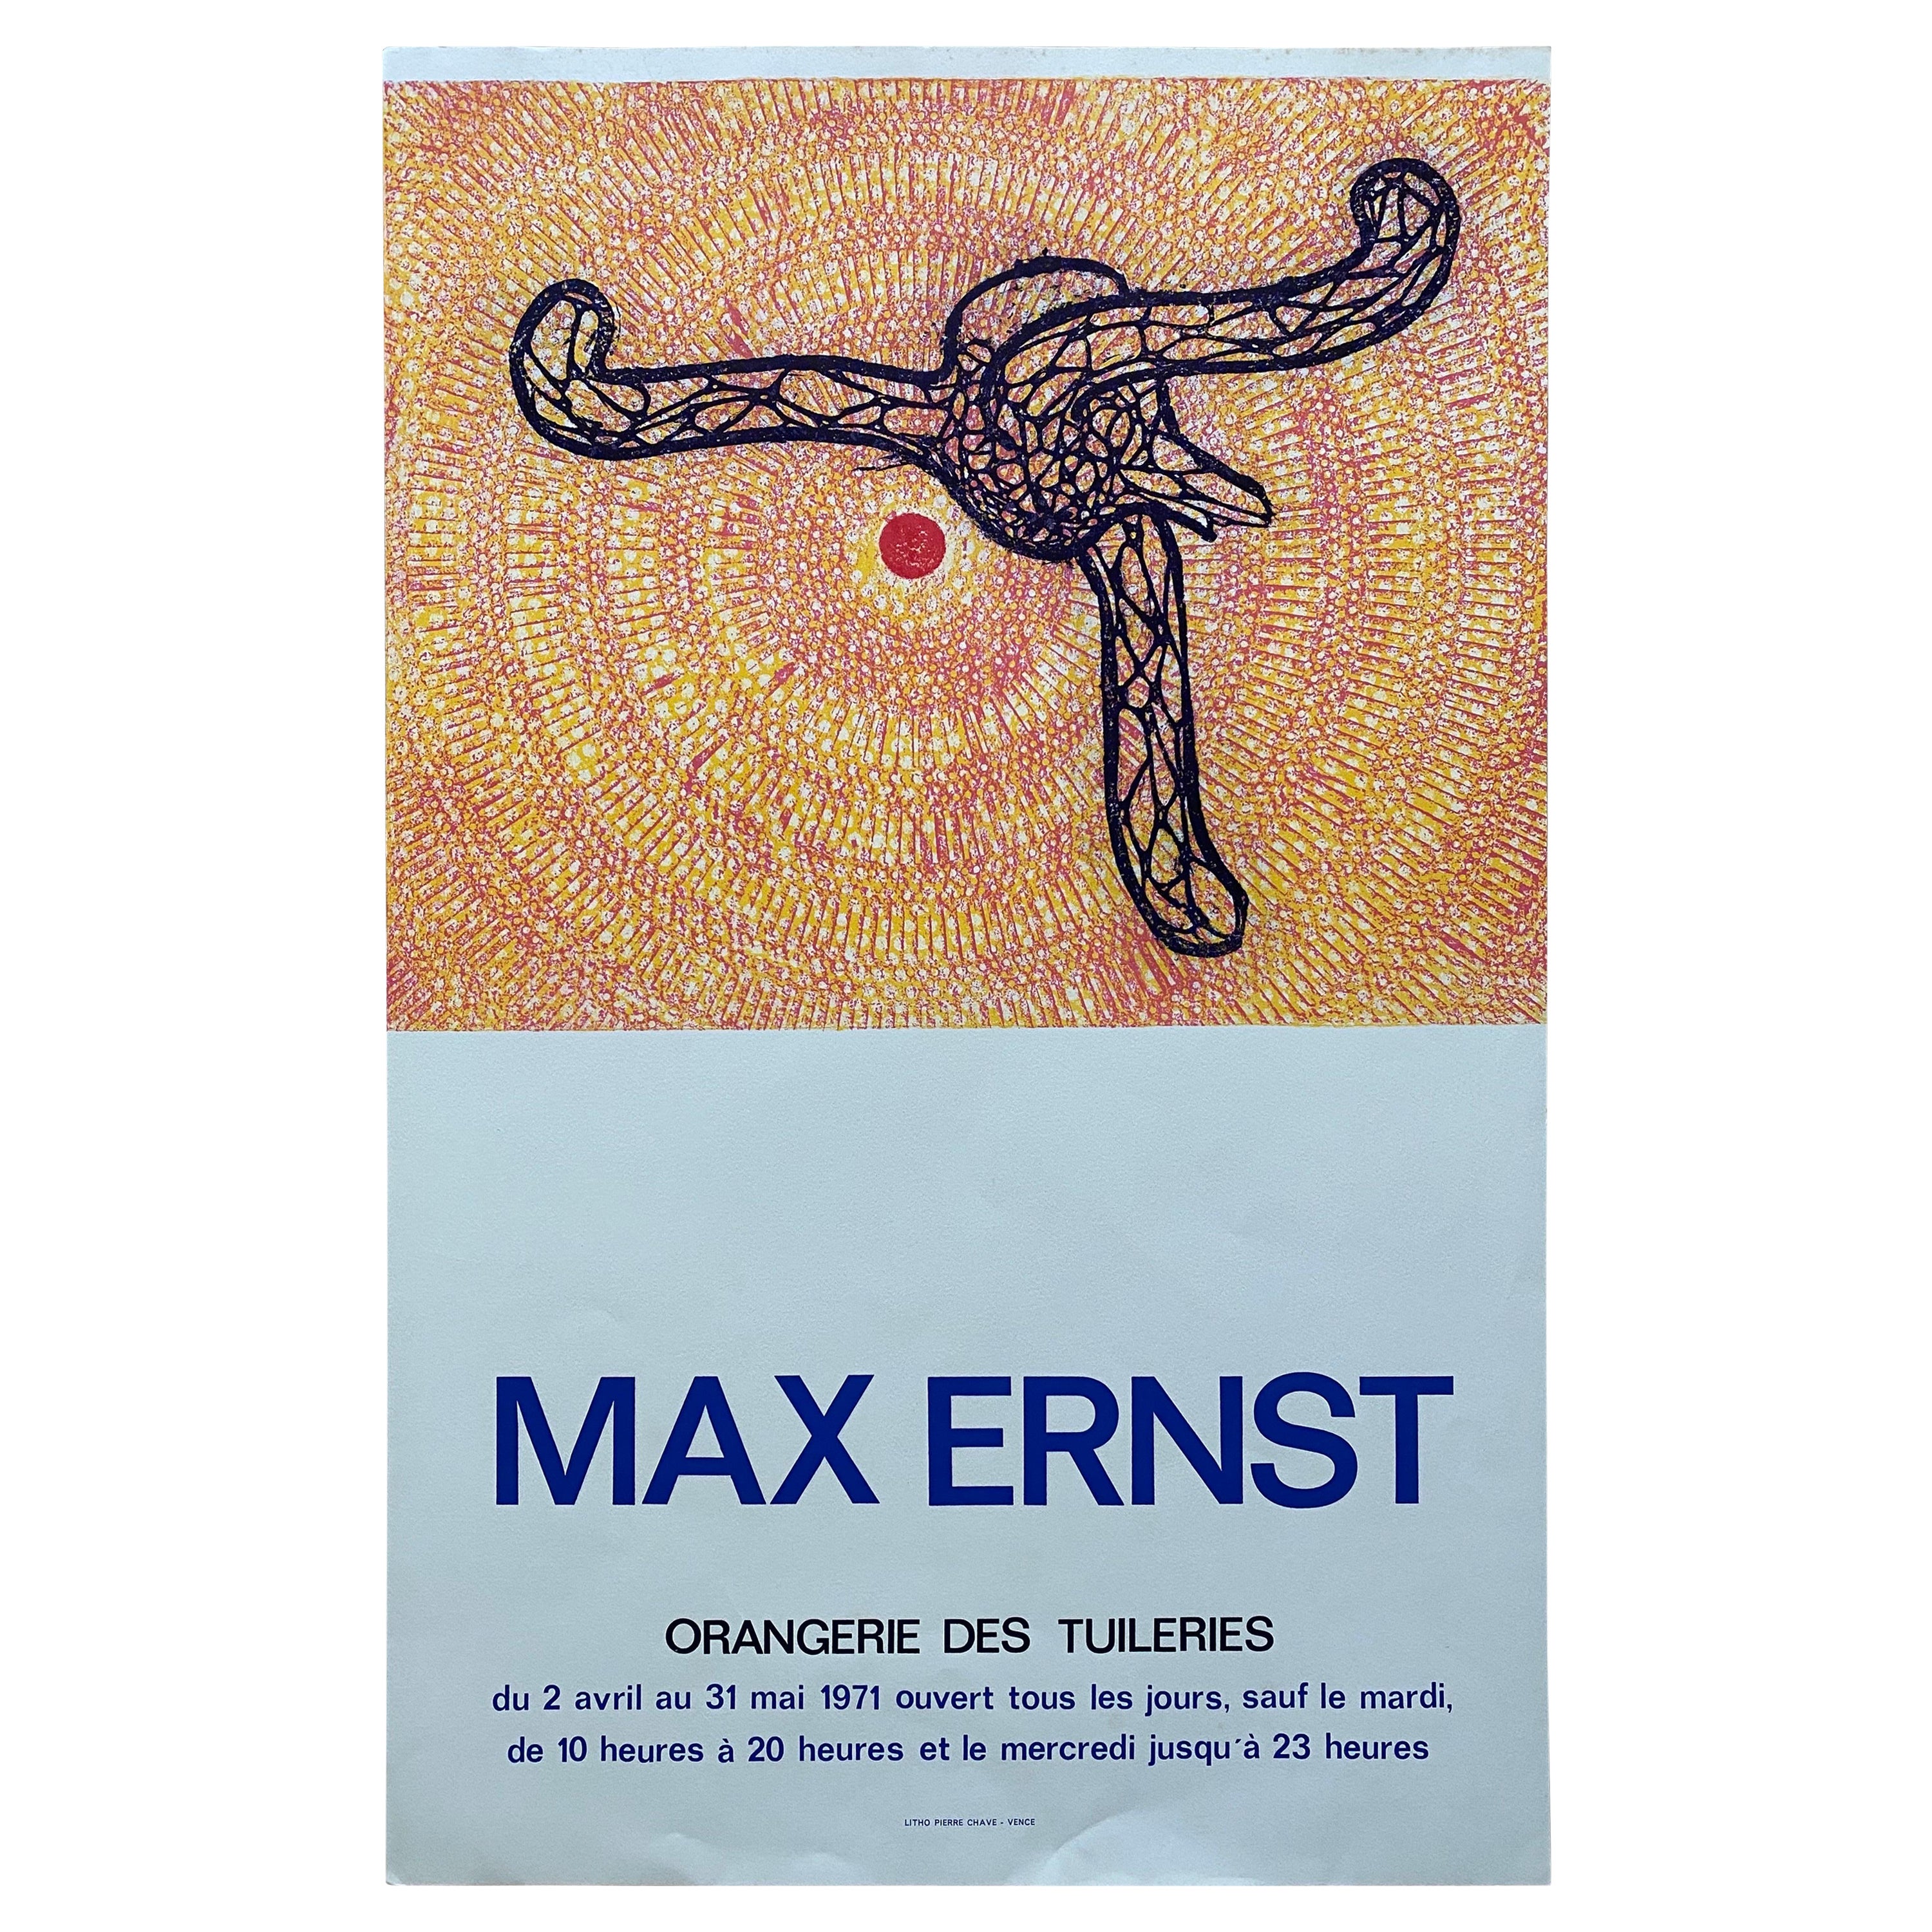 1971 Max Ernst "Orangerie Des Tuileries" Exposition Lithograph For Sale